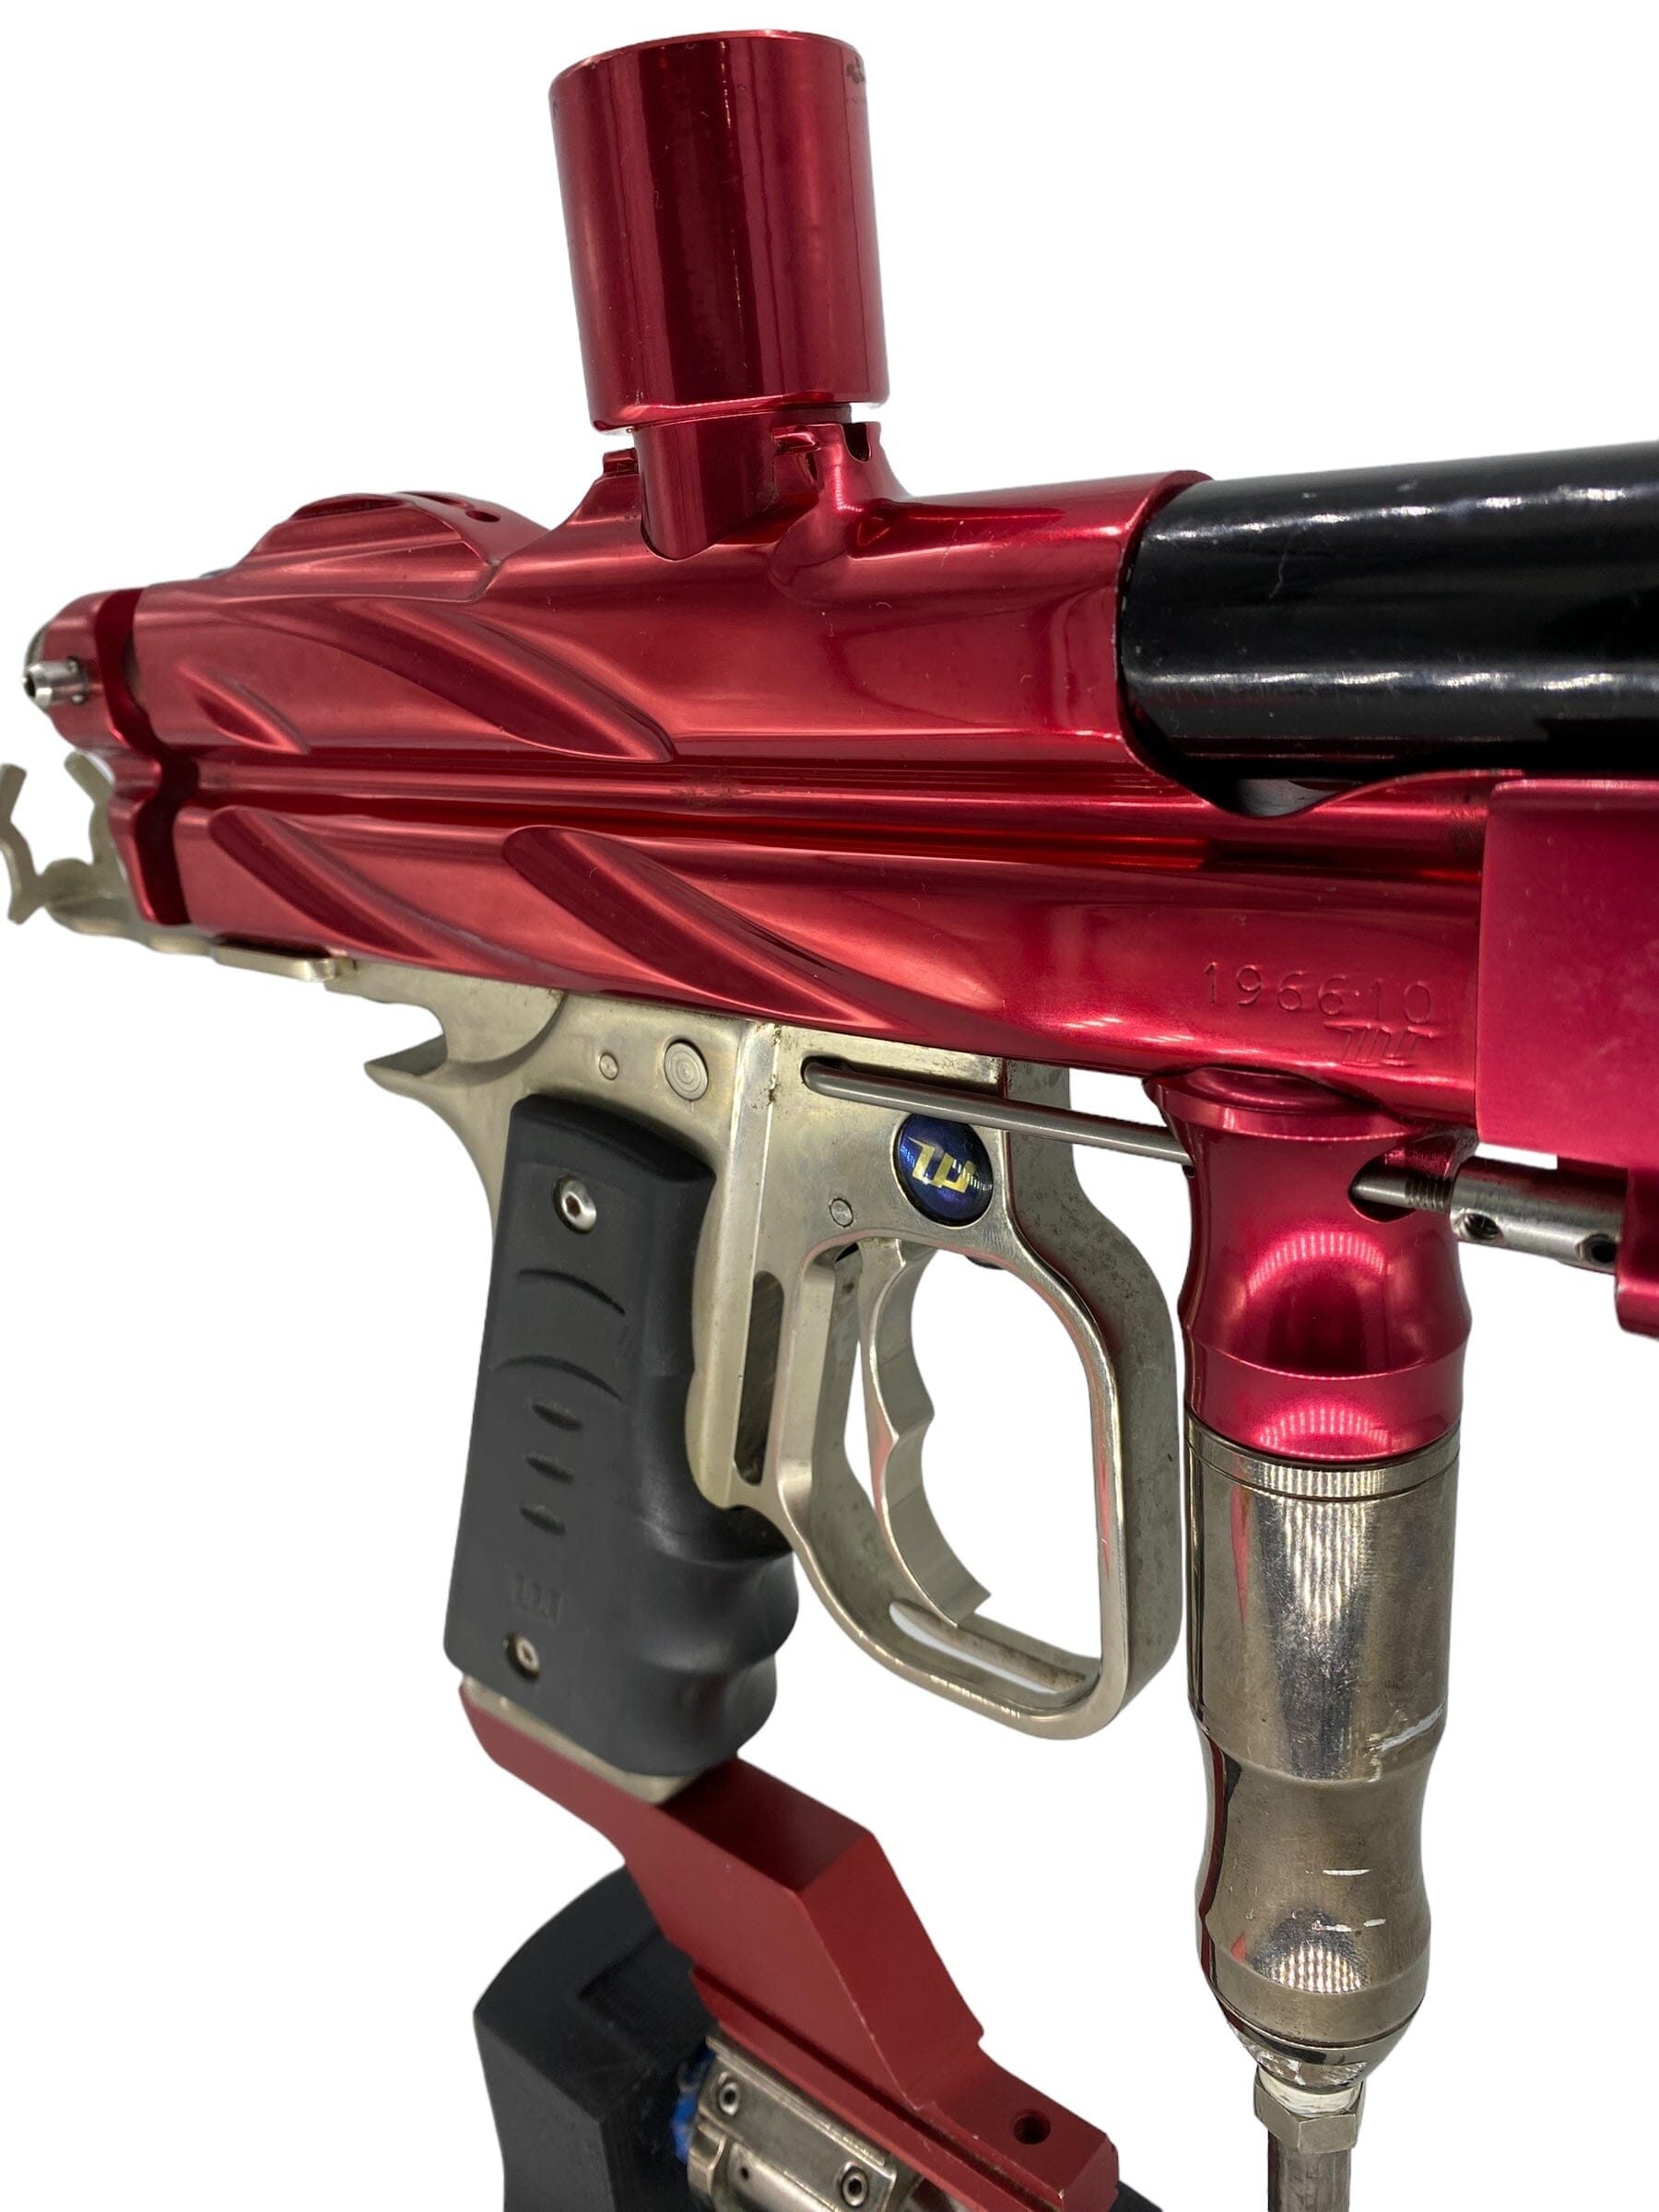 Used WGP Autococker Paintball Gun Paintball Gun from CPXBrosPaintball Buy/Sell/Trade Paintball Markers, New Paintball Guns, Paintball Hoppers, Paintball Masks, and Hormesis Headbands